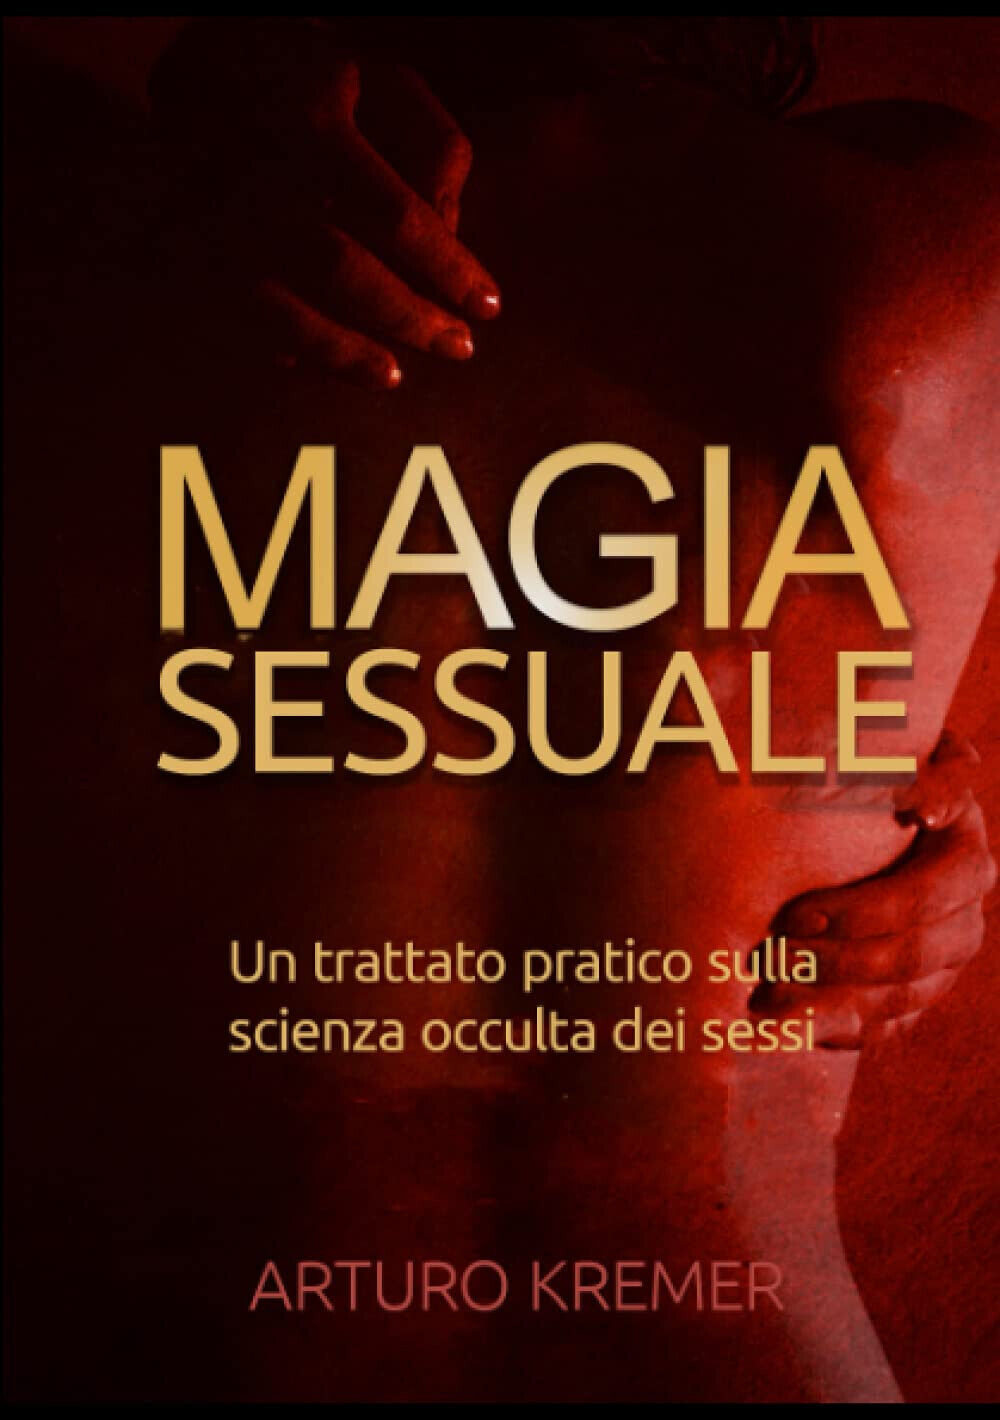 Magia sessuale - Arturo Kremer - StreetLib, 2021